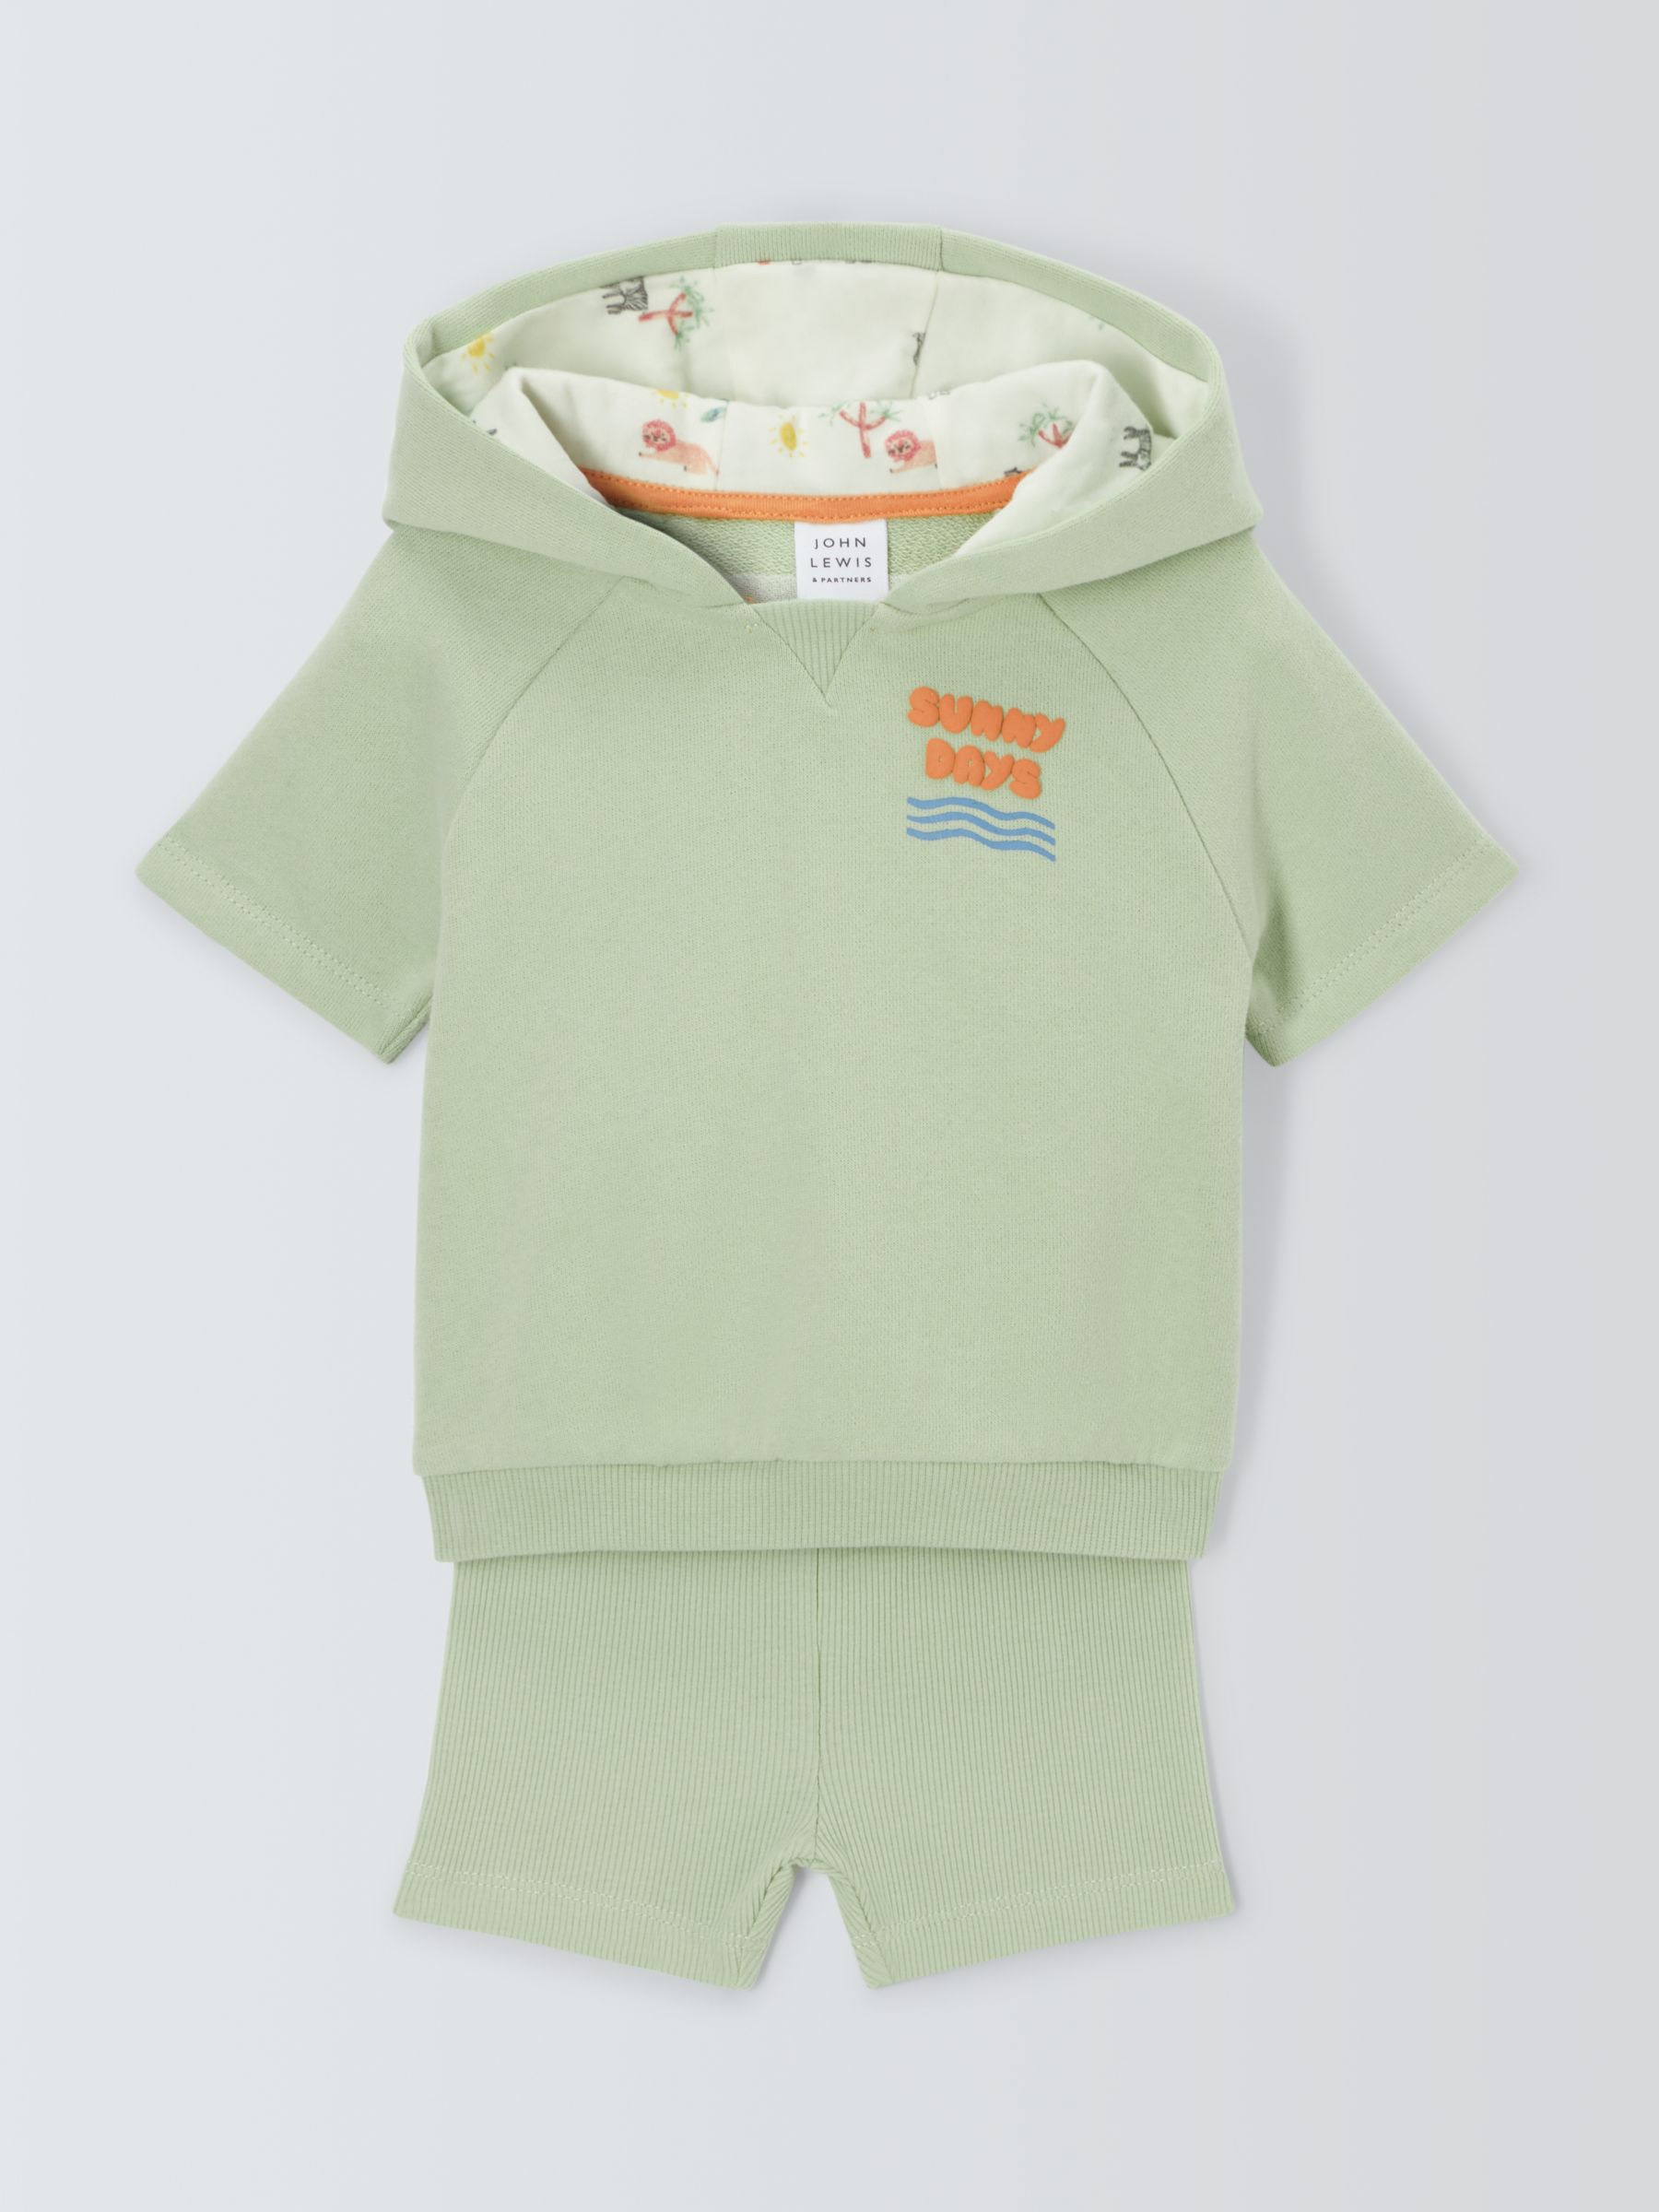 John Lewis Baby Shorts and Hoodie Set, Green, 0-3 months